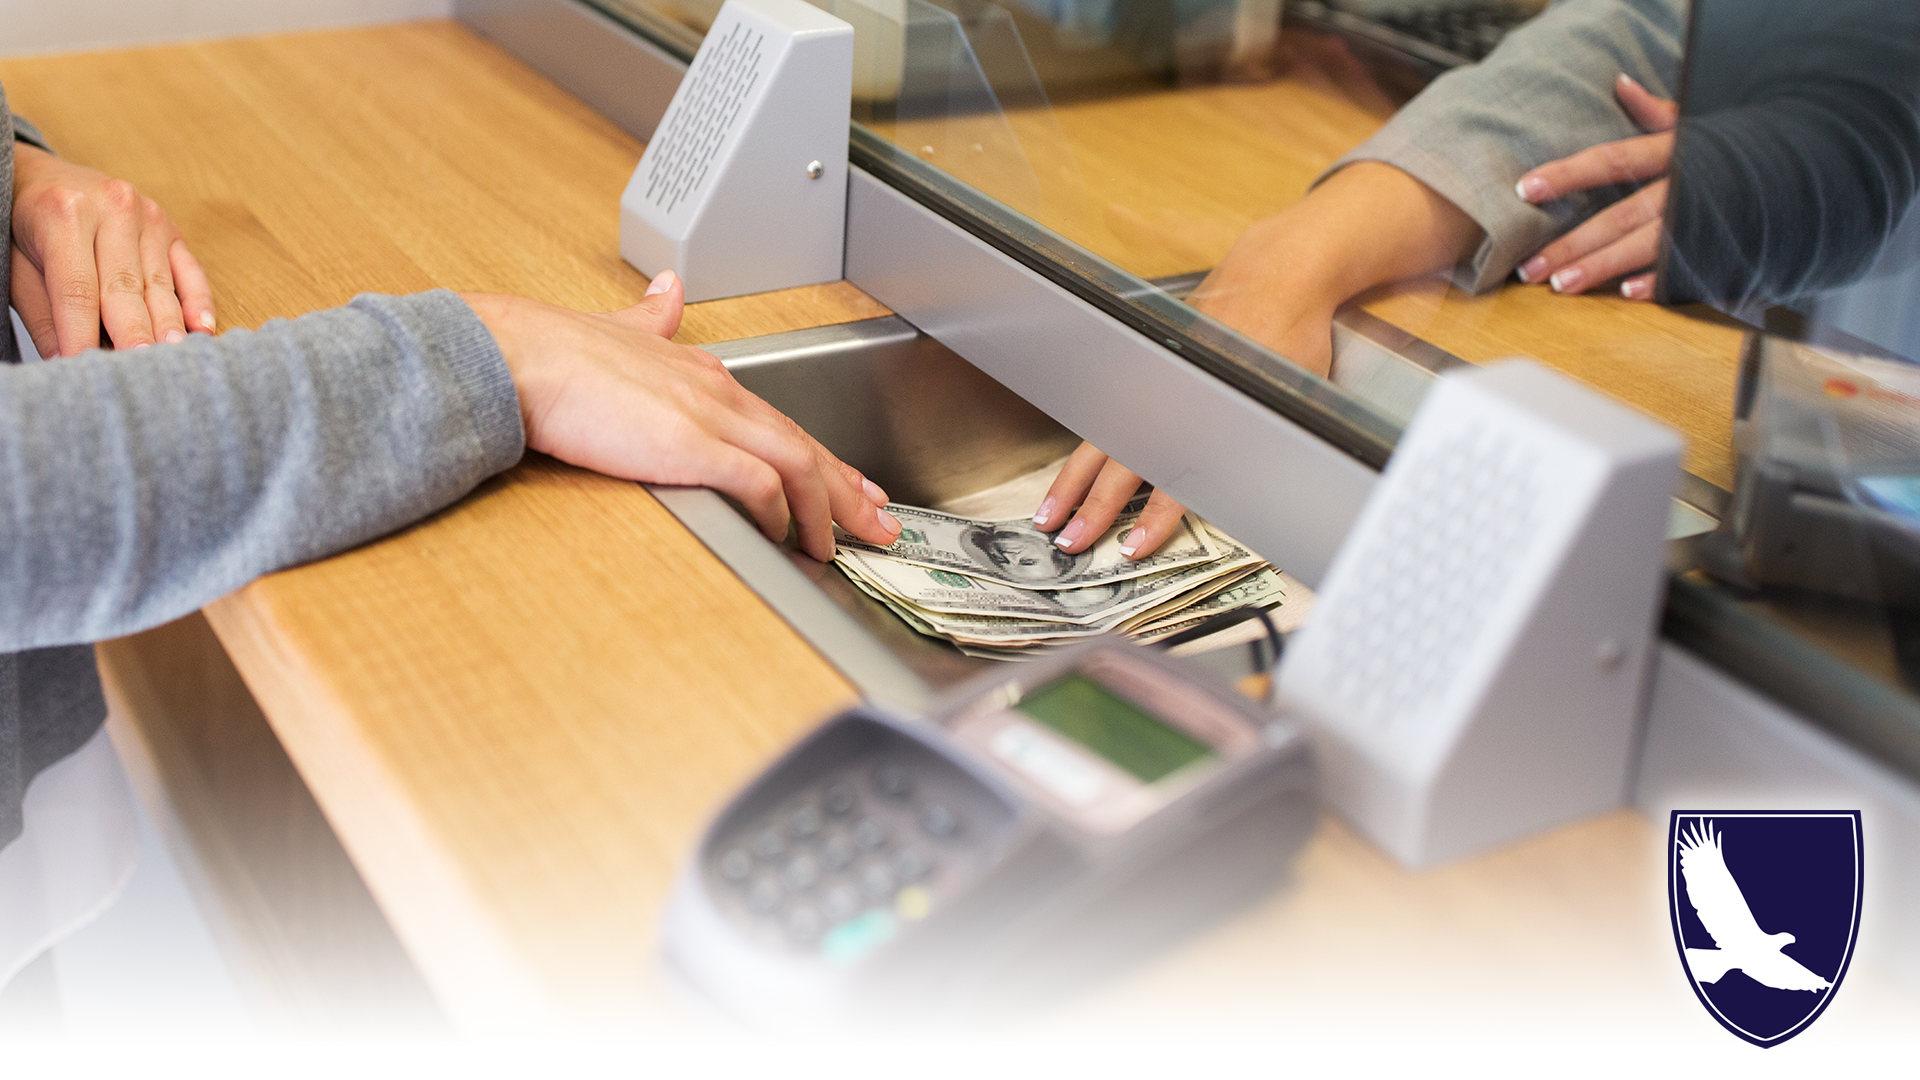 Collecting Money at bank through teller window